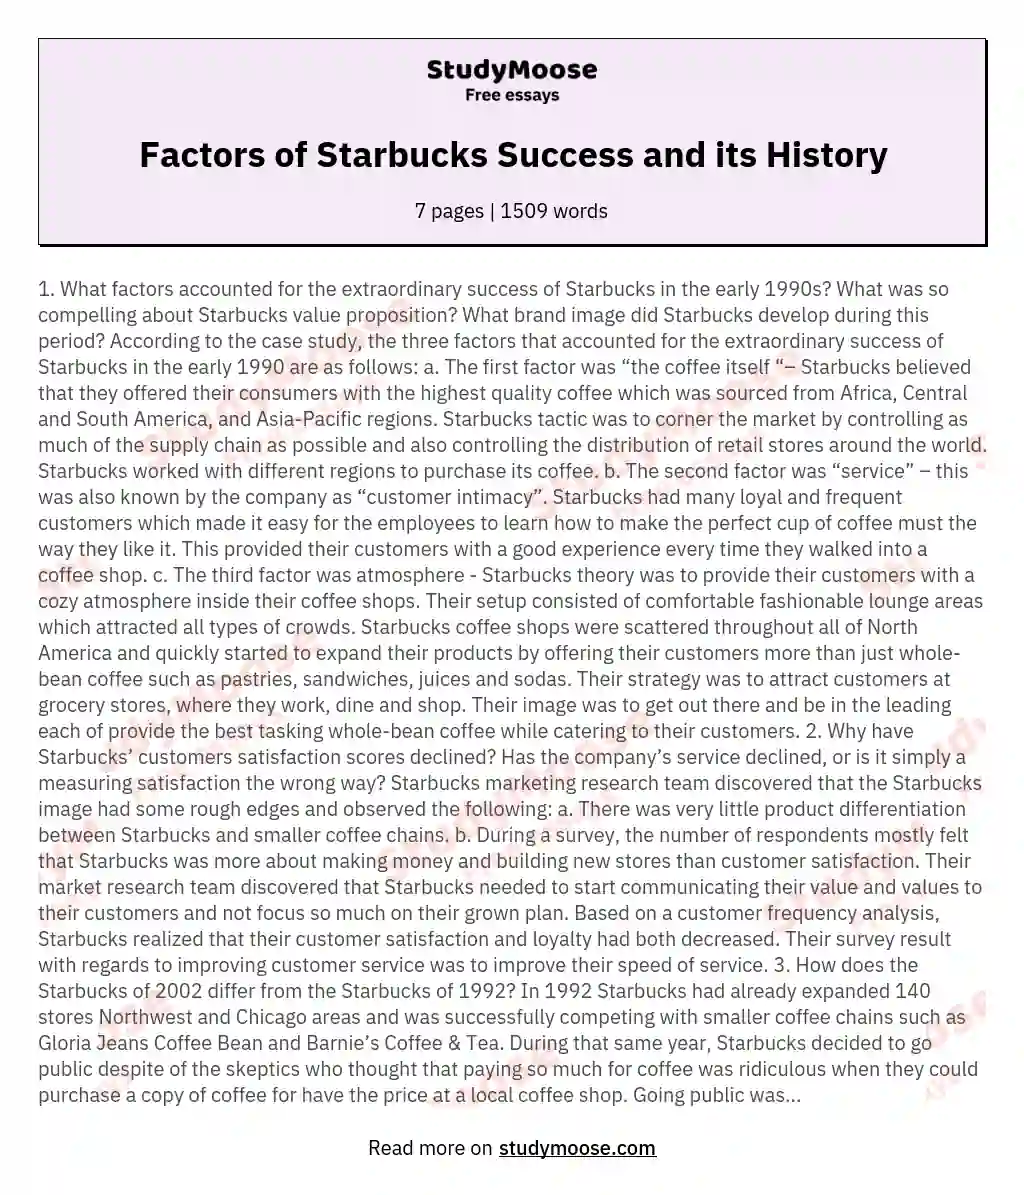 Factors of Starbucks Success and its History essay